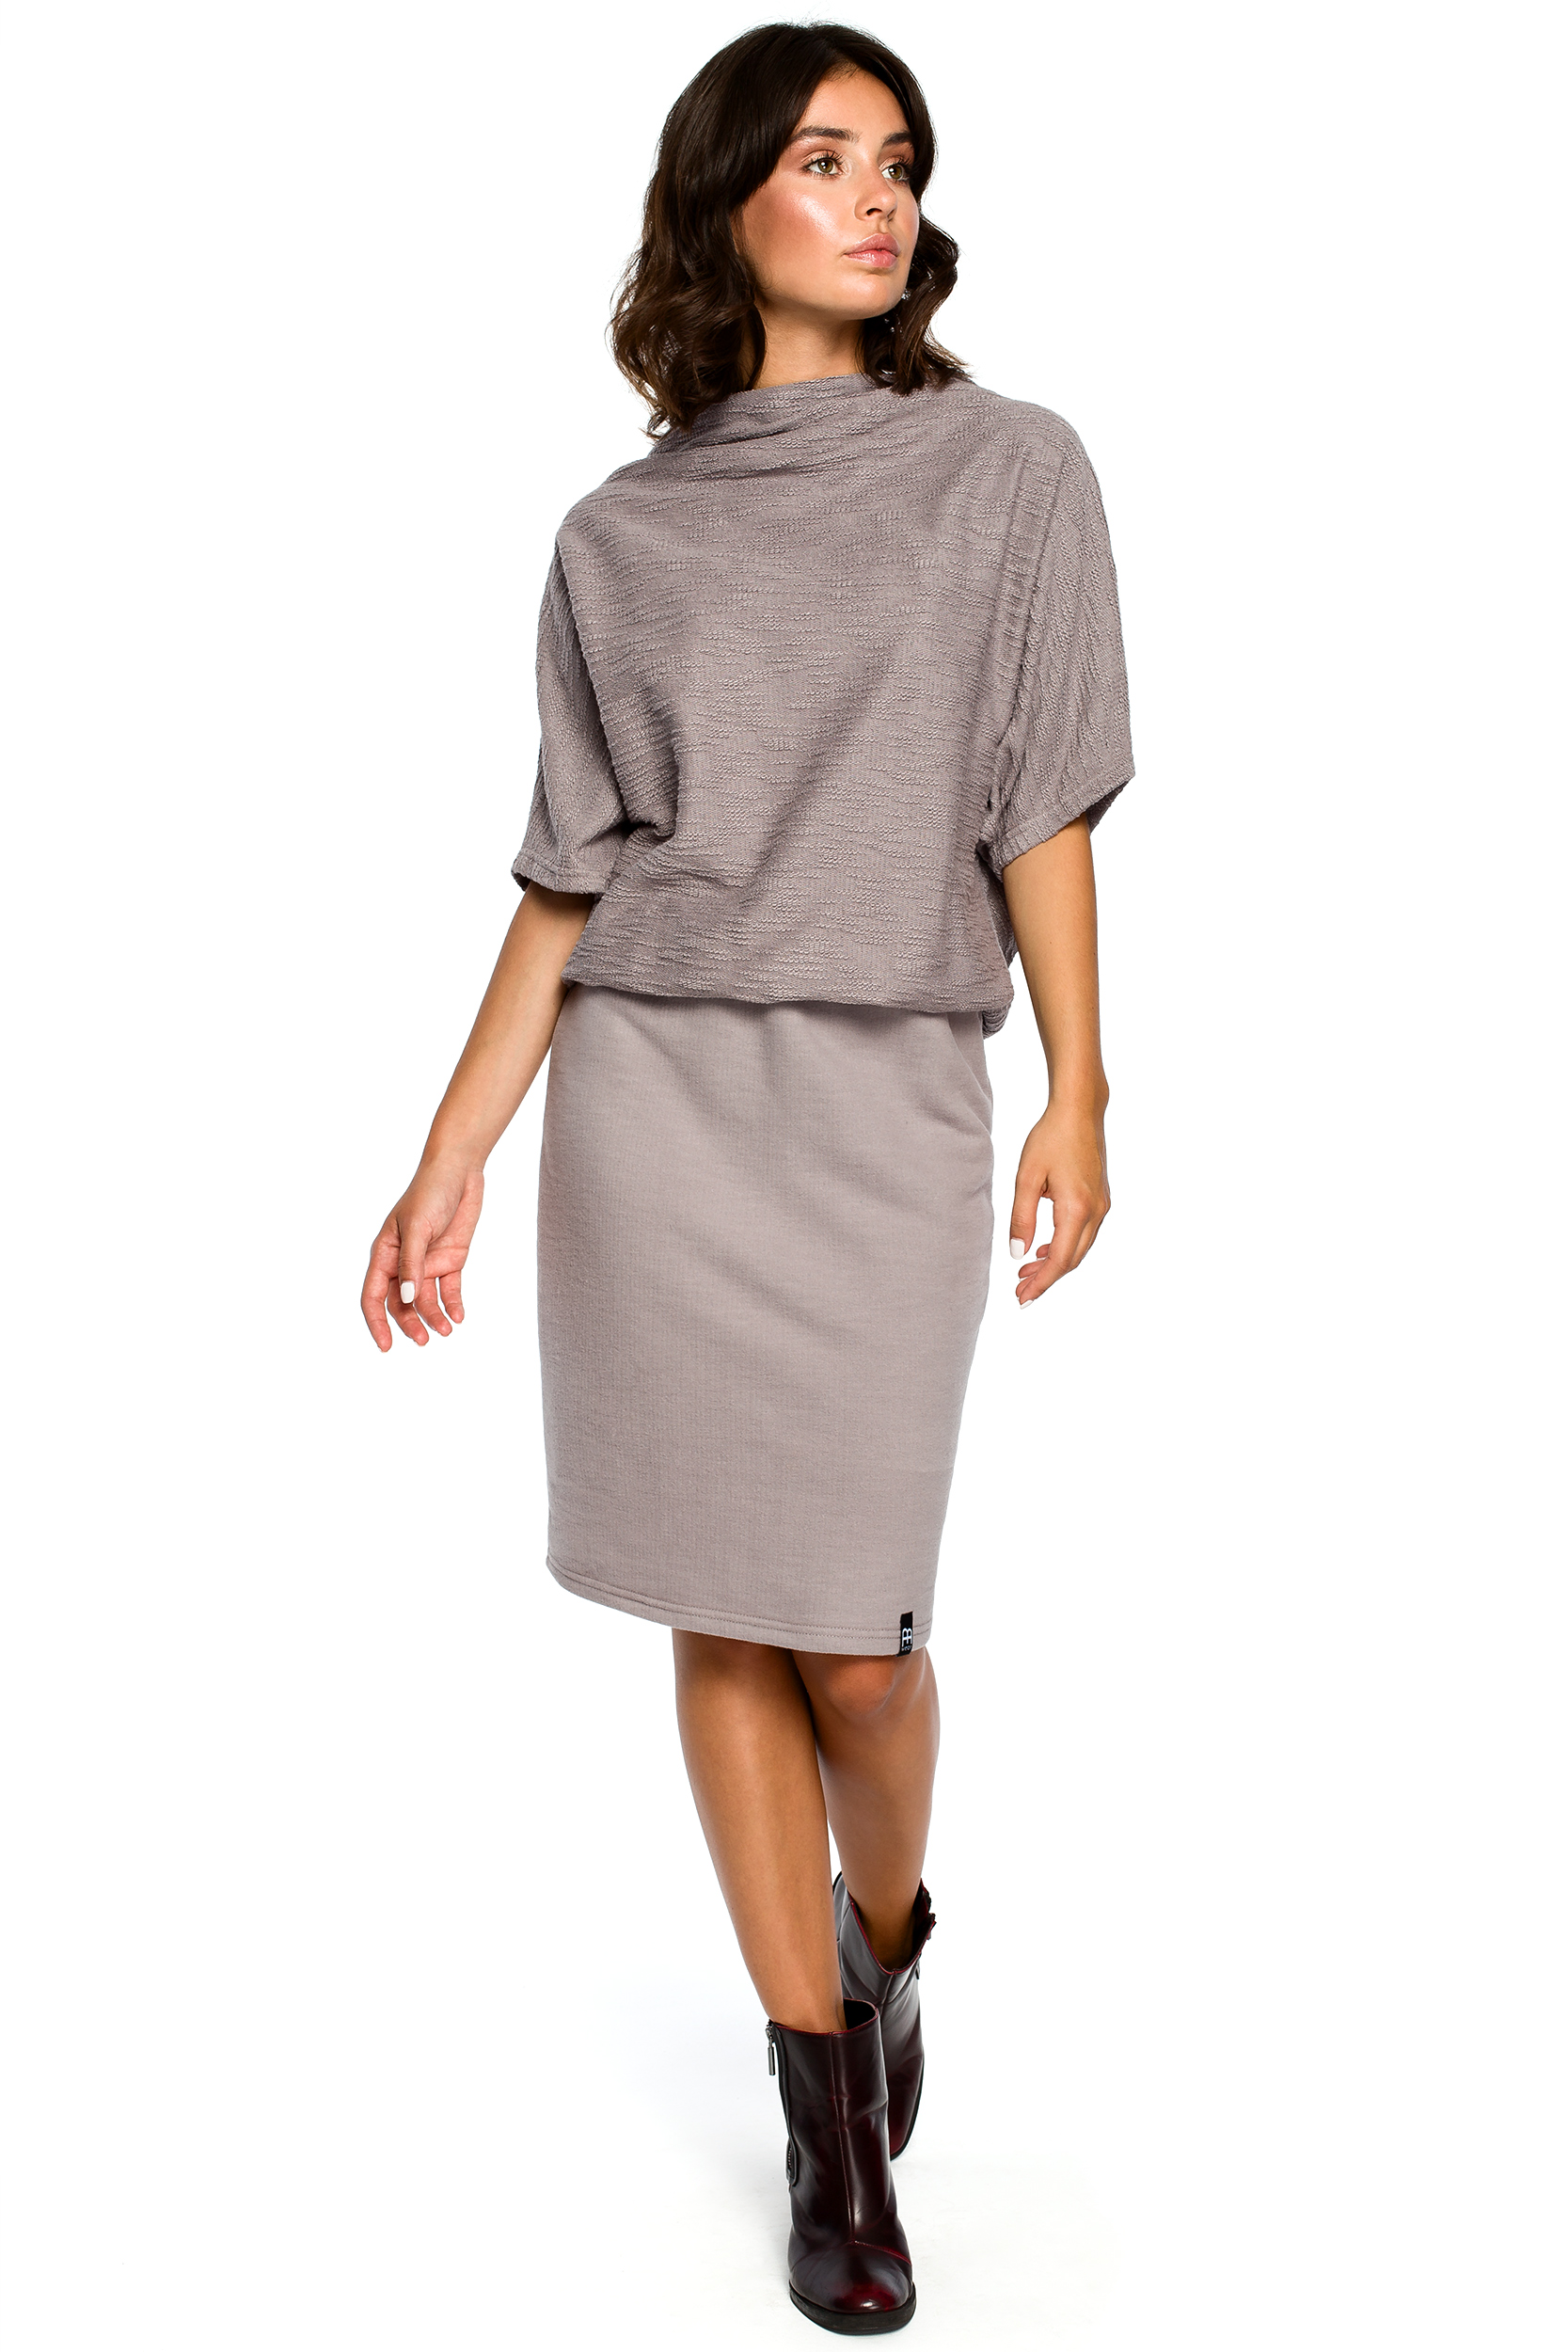 B097 Blouson top and stretchy pencil skirt dress – BeWear